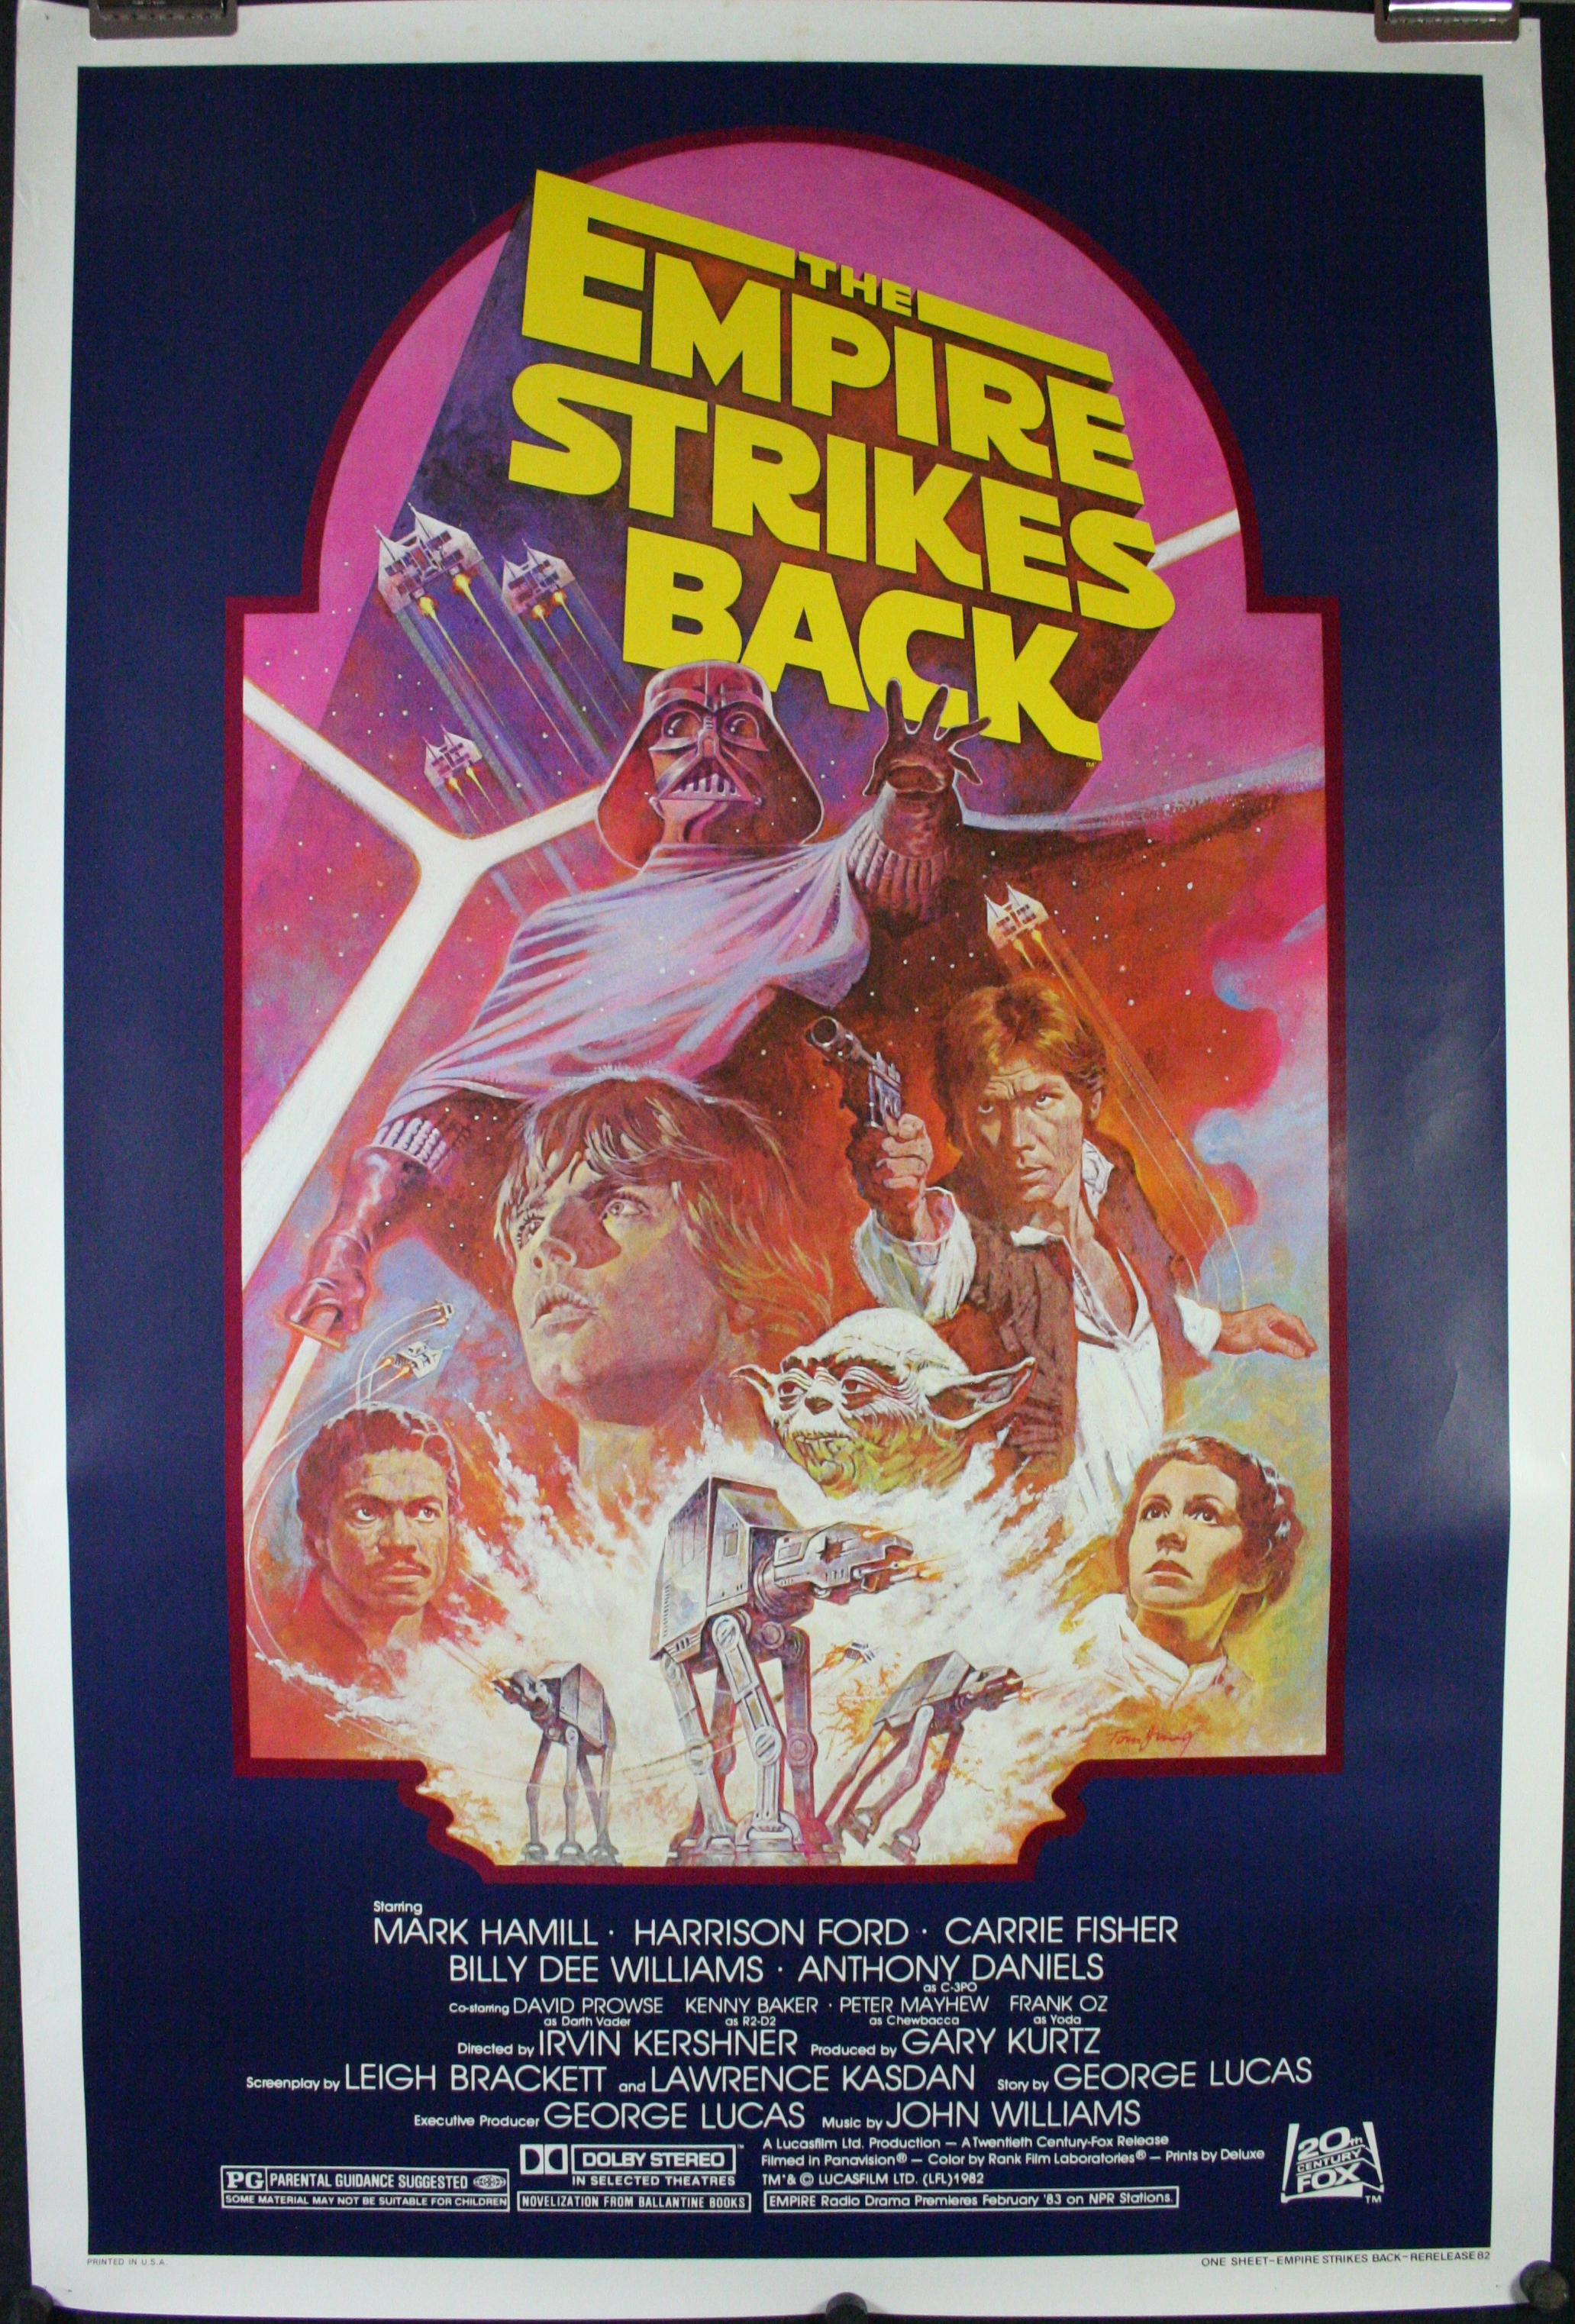 1 BACK, Re WARS Theater Original Release Original Posters - Poster Sheet STRIKES STAR Movie Vintage 82 Movie EMPIRE